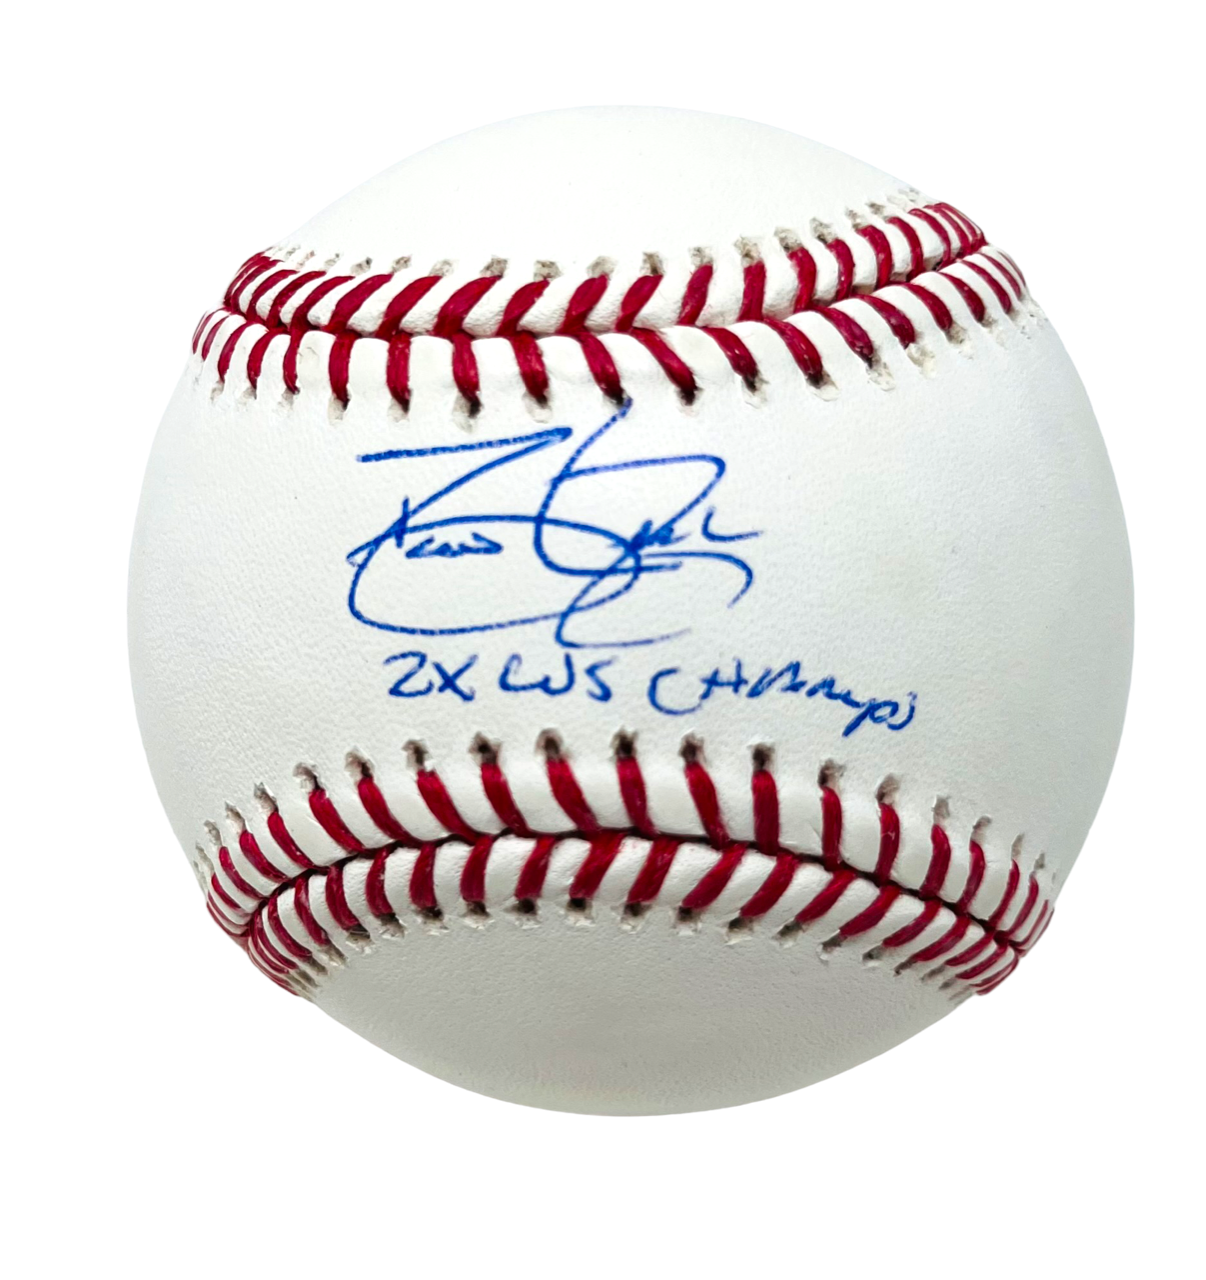 Dave Justice Autographed Atlanta Custom Gray Baseball Jersey - BAS